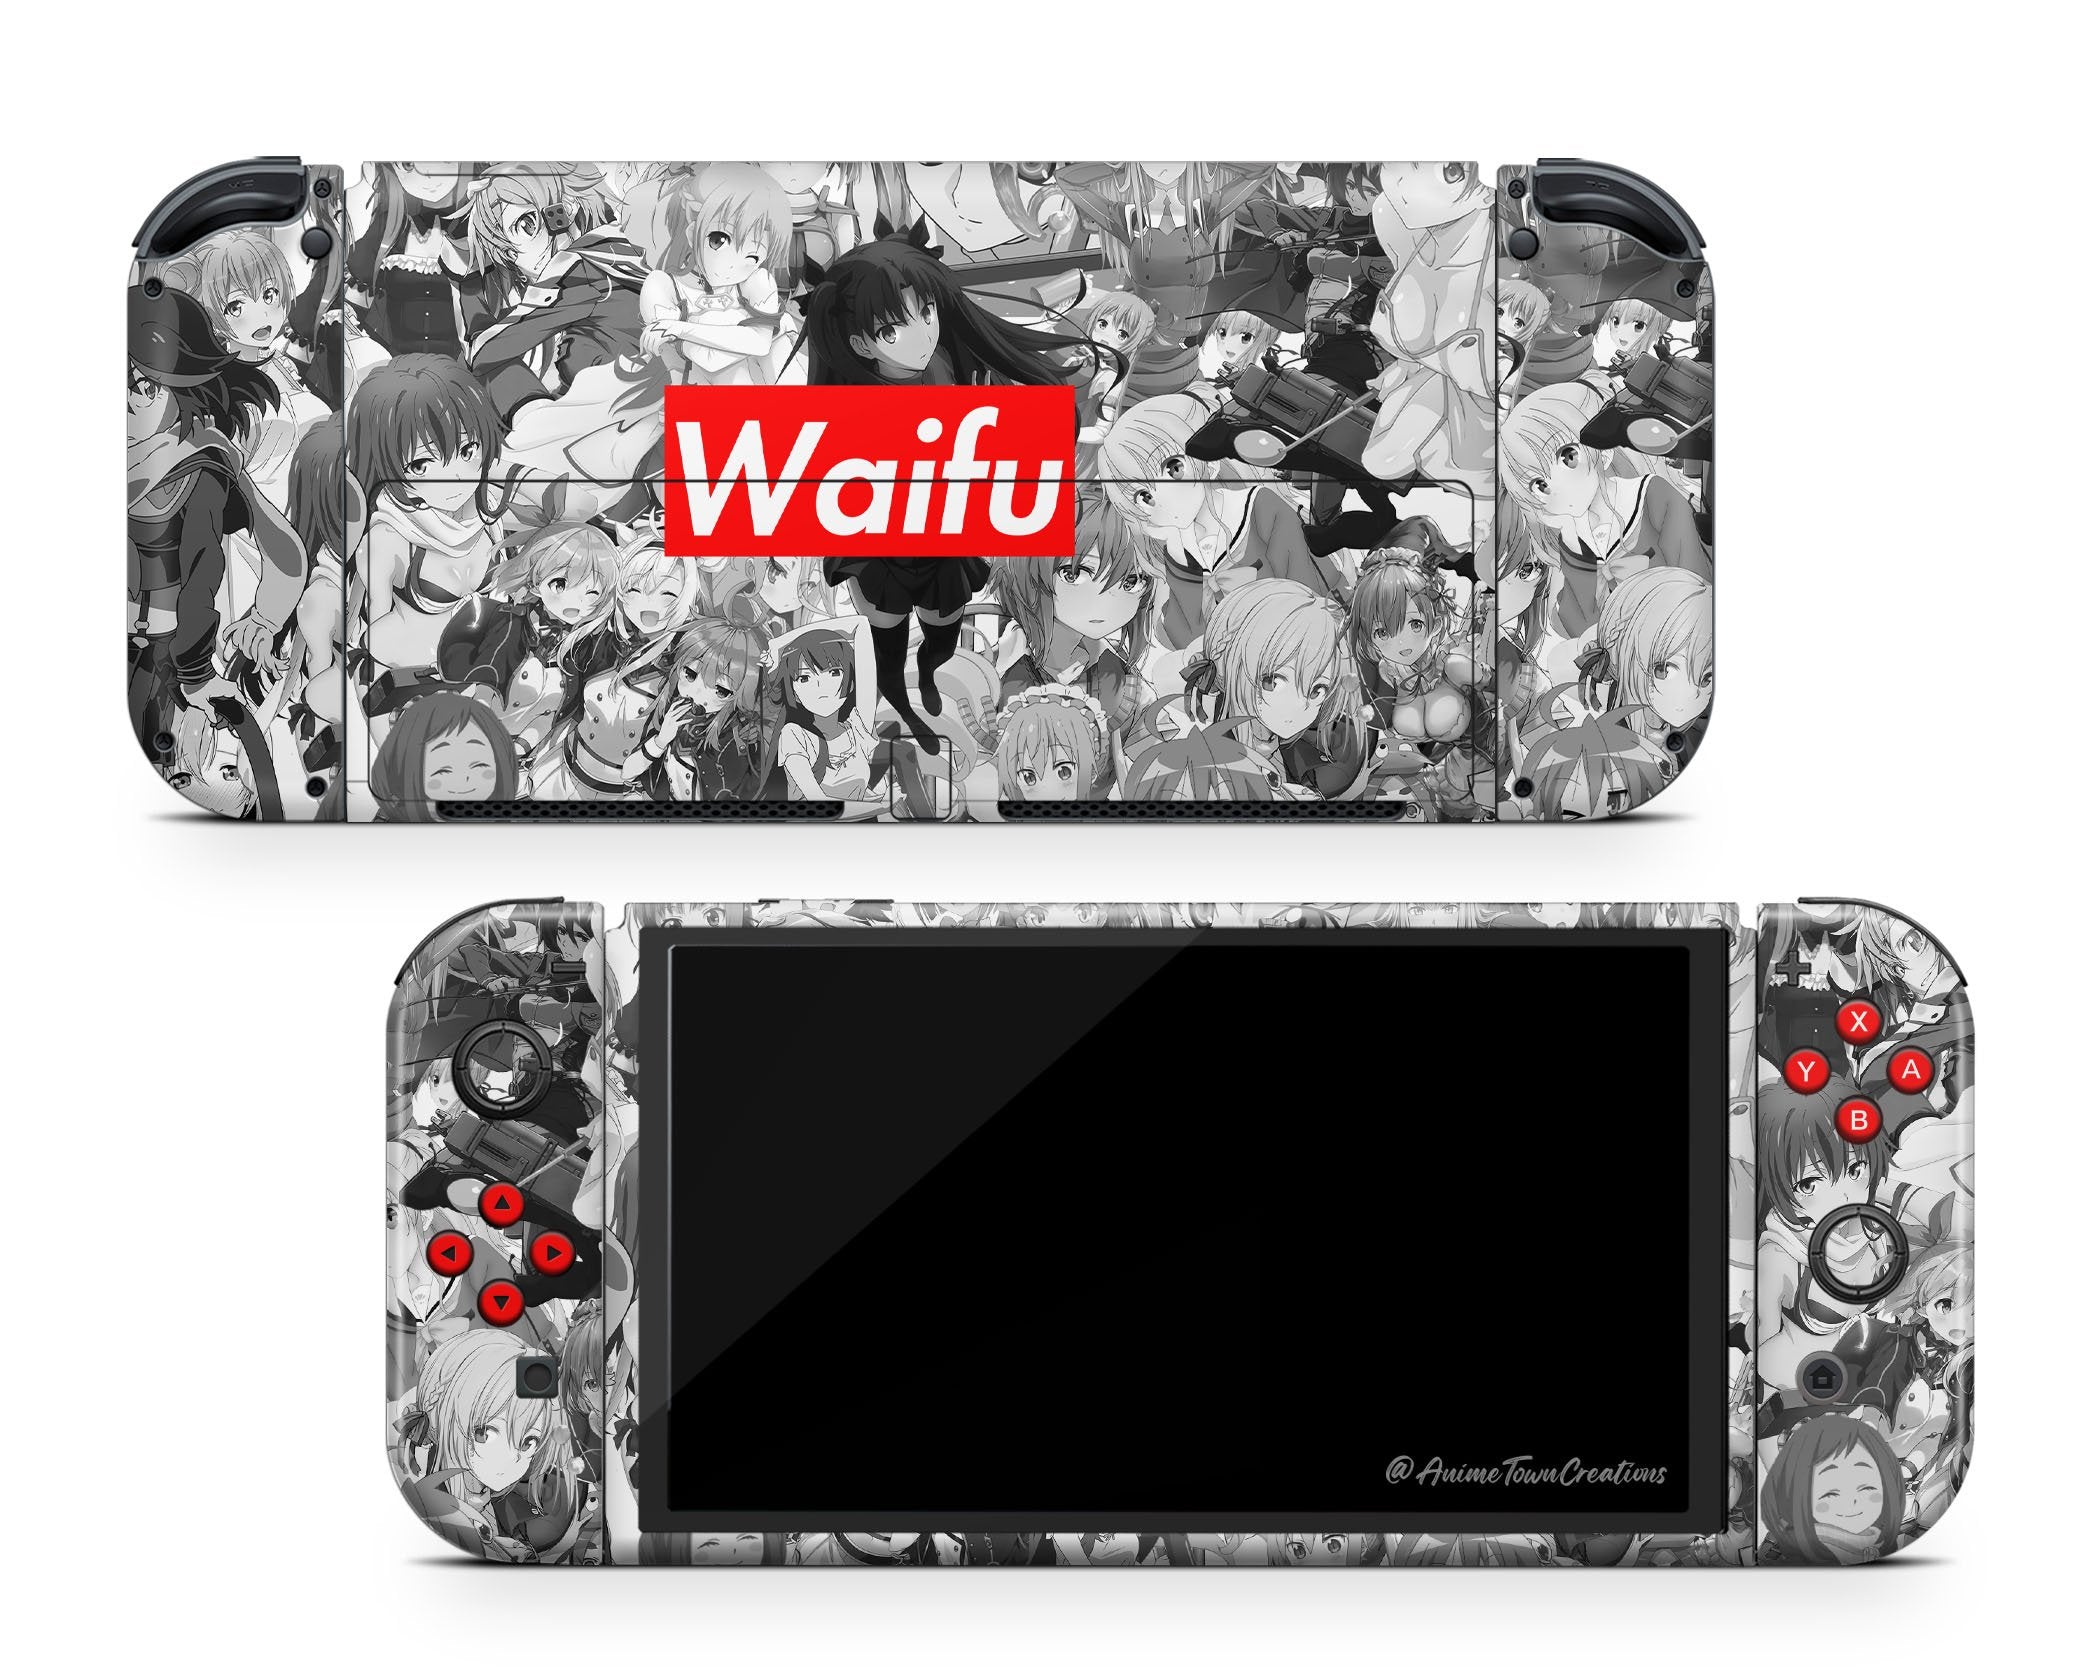 Waifu Nintendo Switch OLED Switch OLED Skin – Anime Town Creations